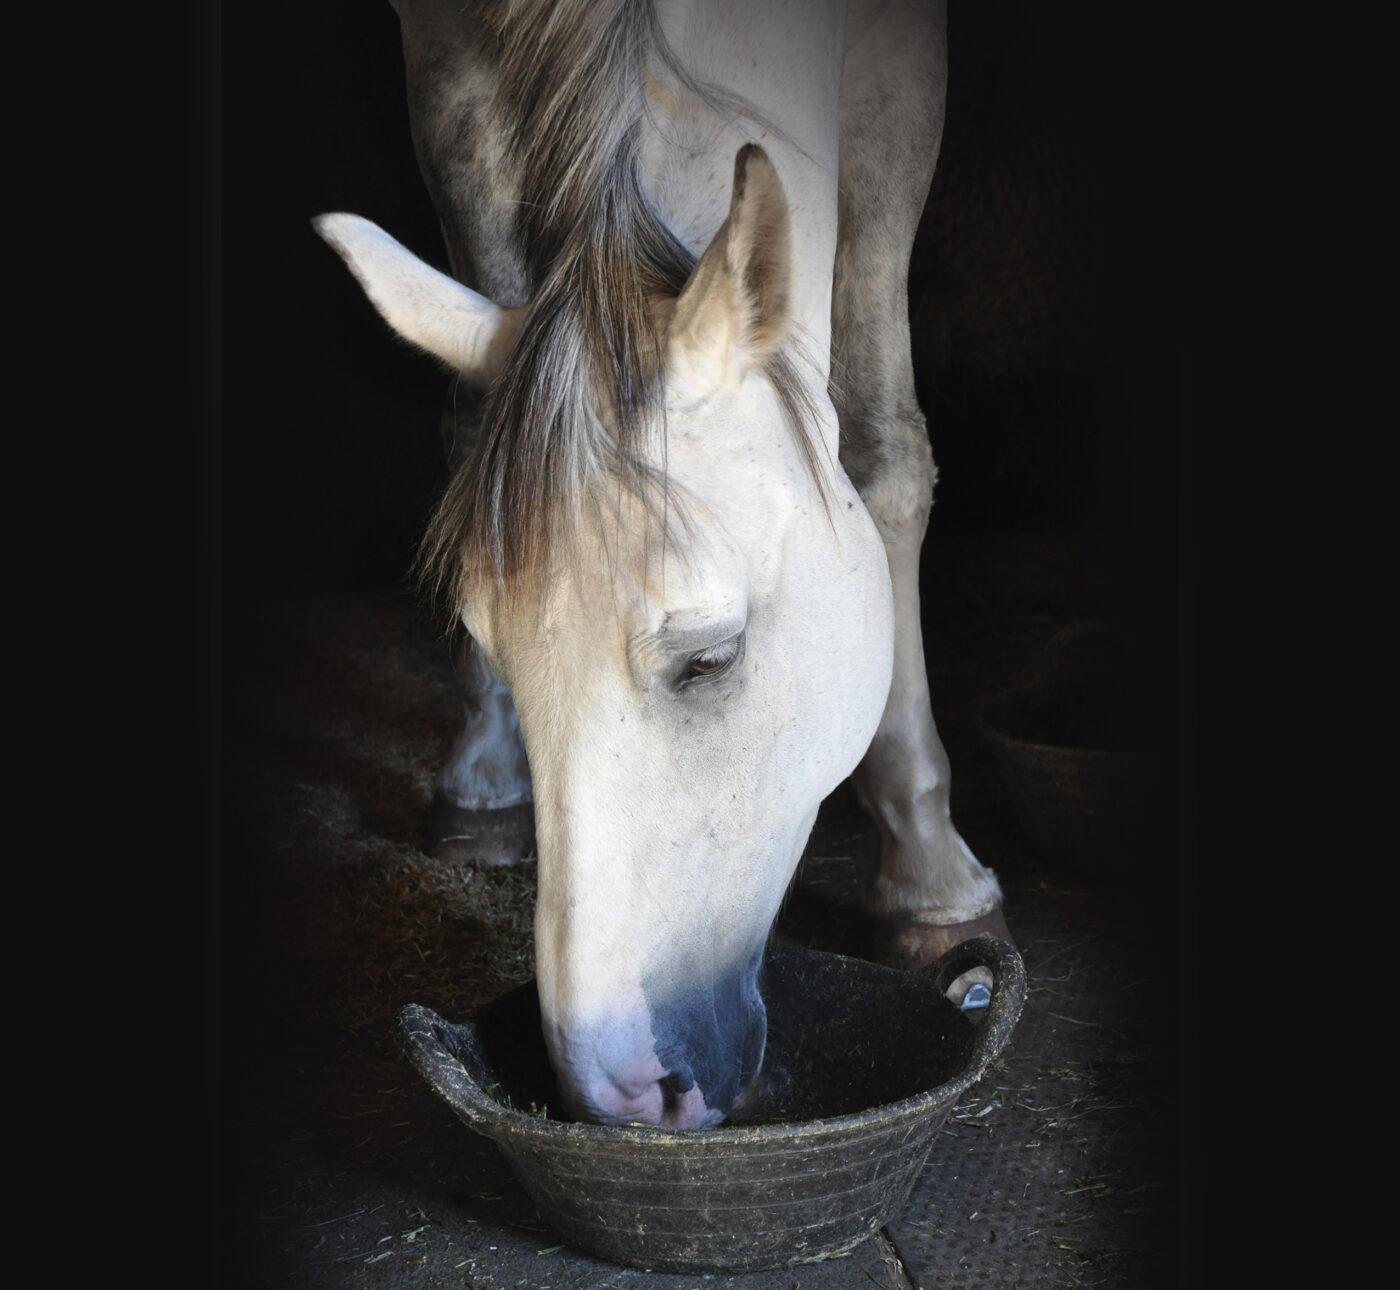 Grey horse eating alfalfa from a bucket